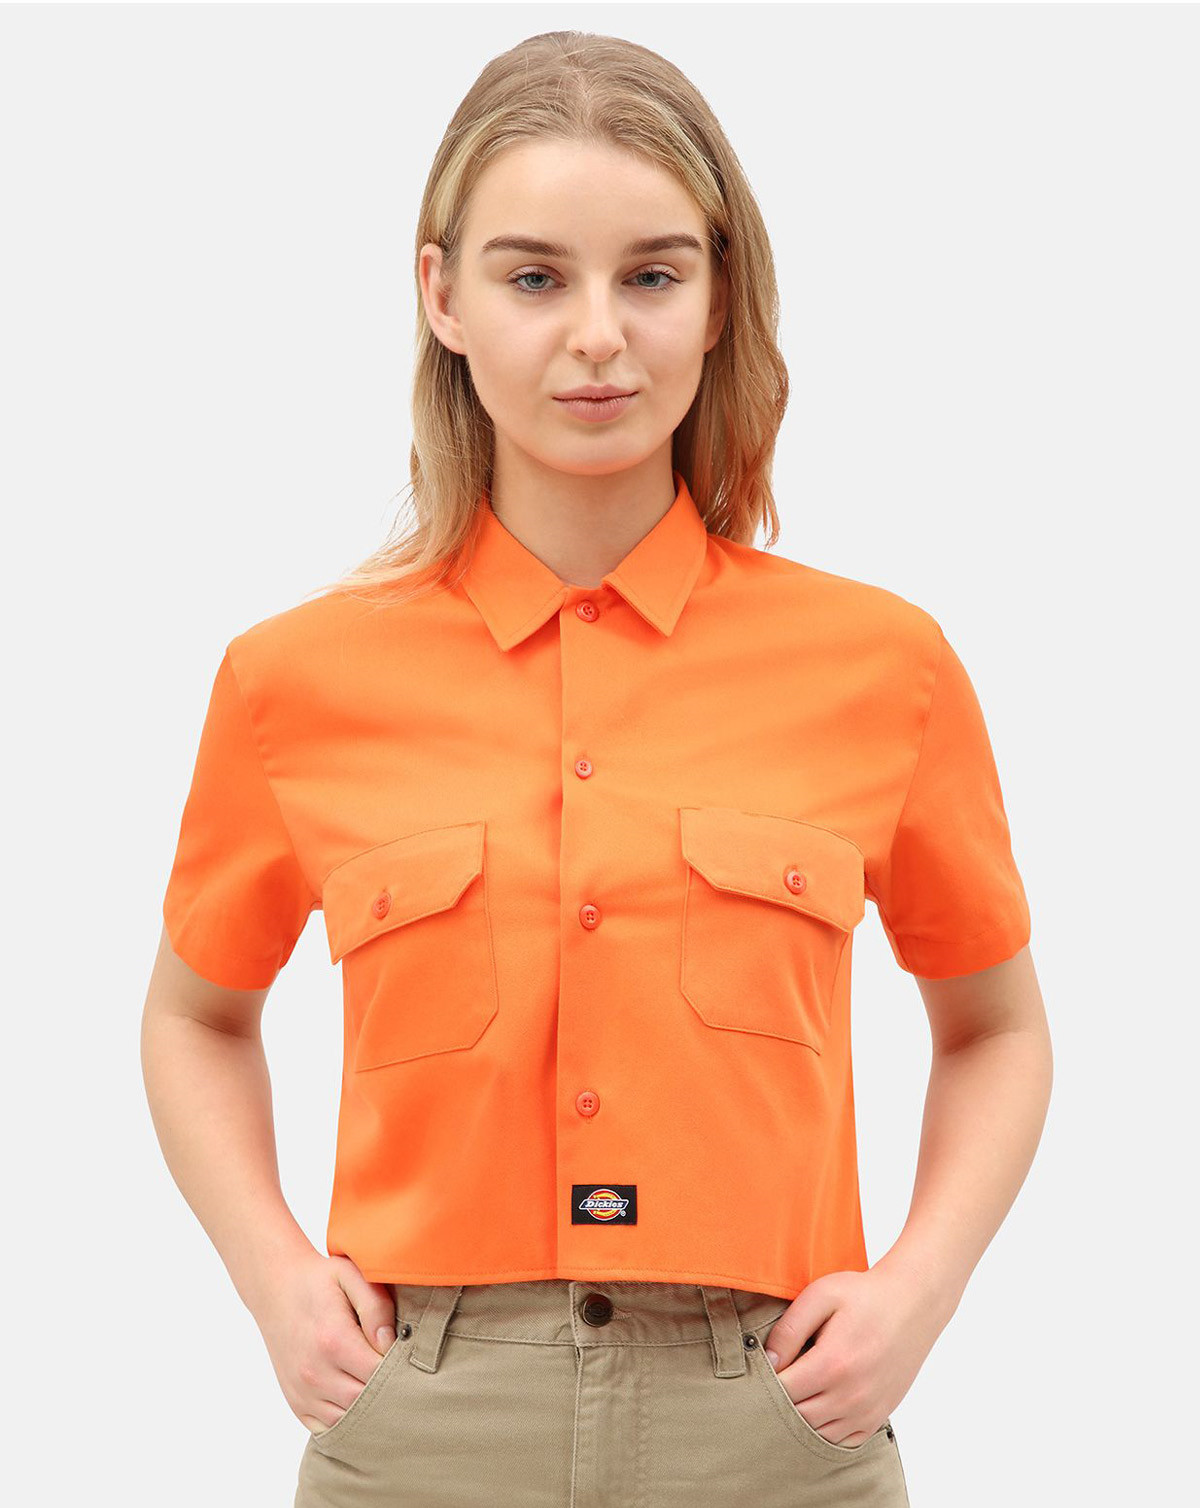 #2 - Dickies Silver Grove Cropped Work Skjorte, Regulær Pasform (Orange, XXS)